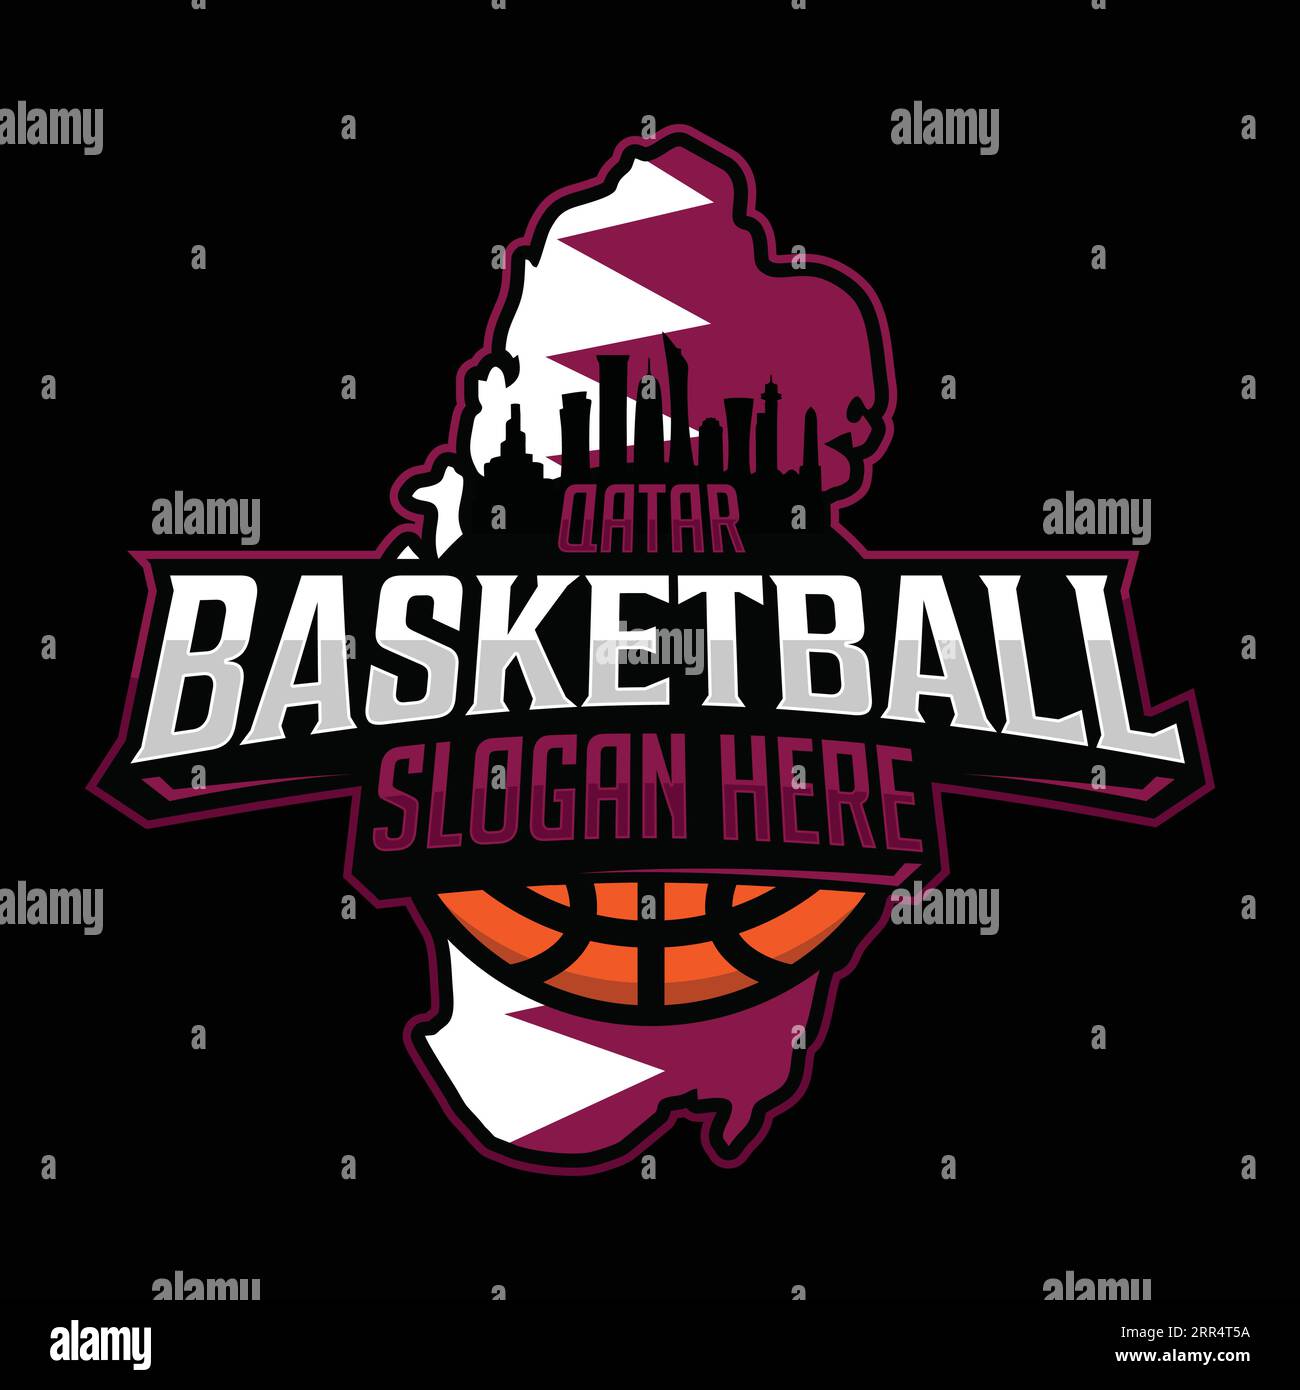 Qatar Basketball team logo emblem in modern style with black background. Vector illustration Stock Vector